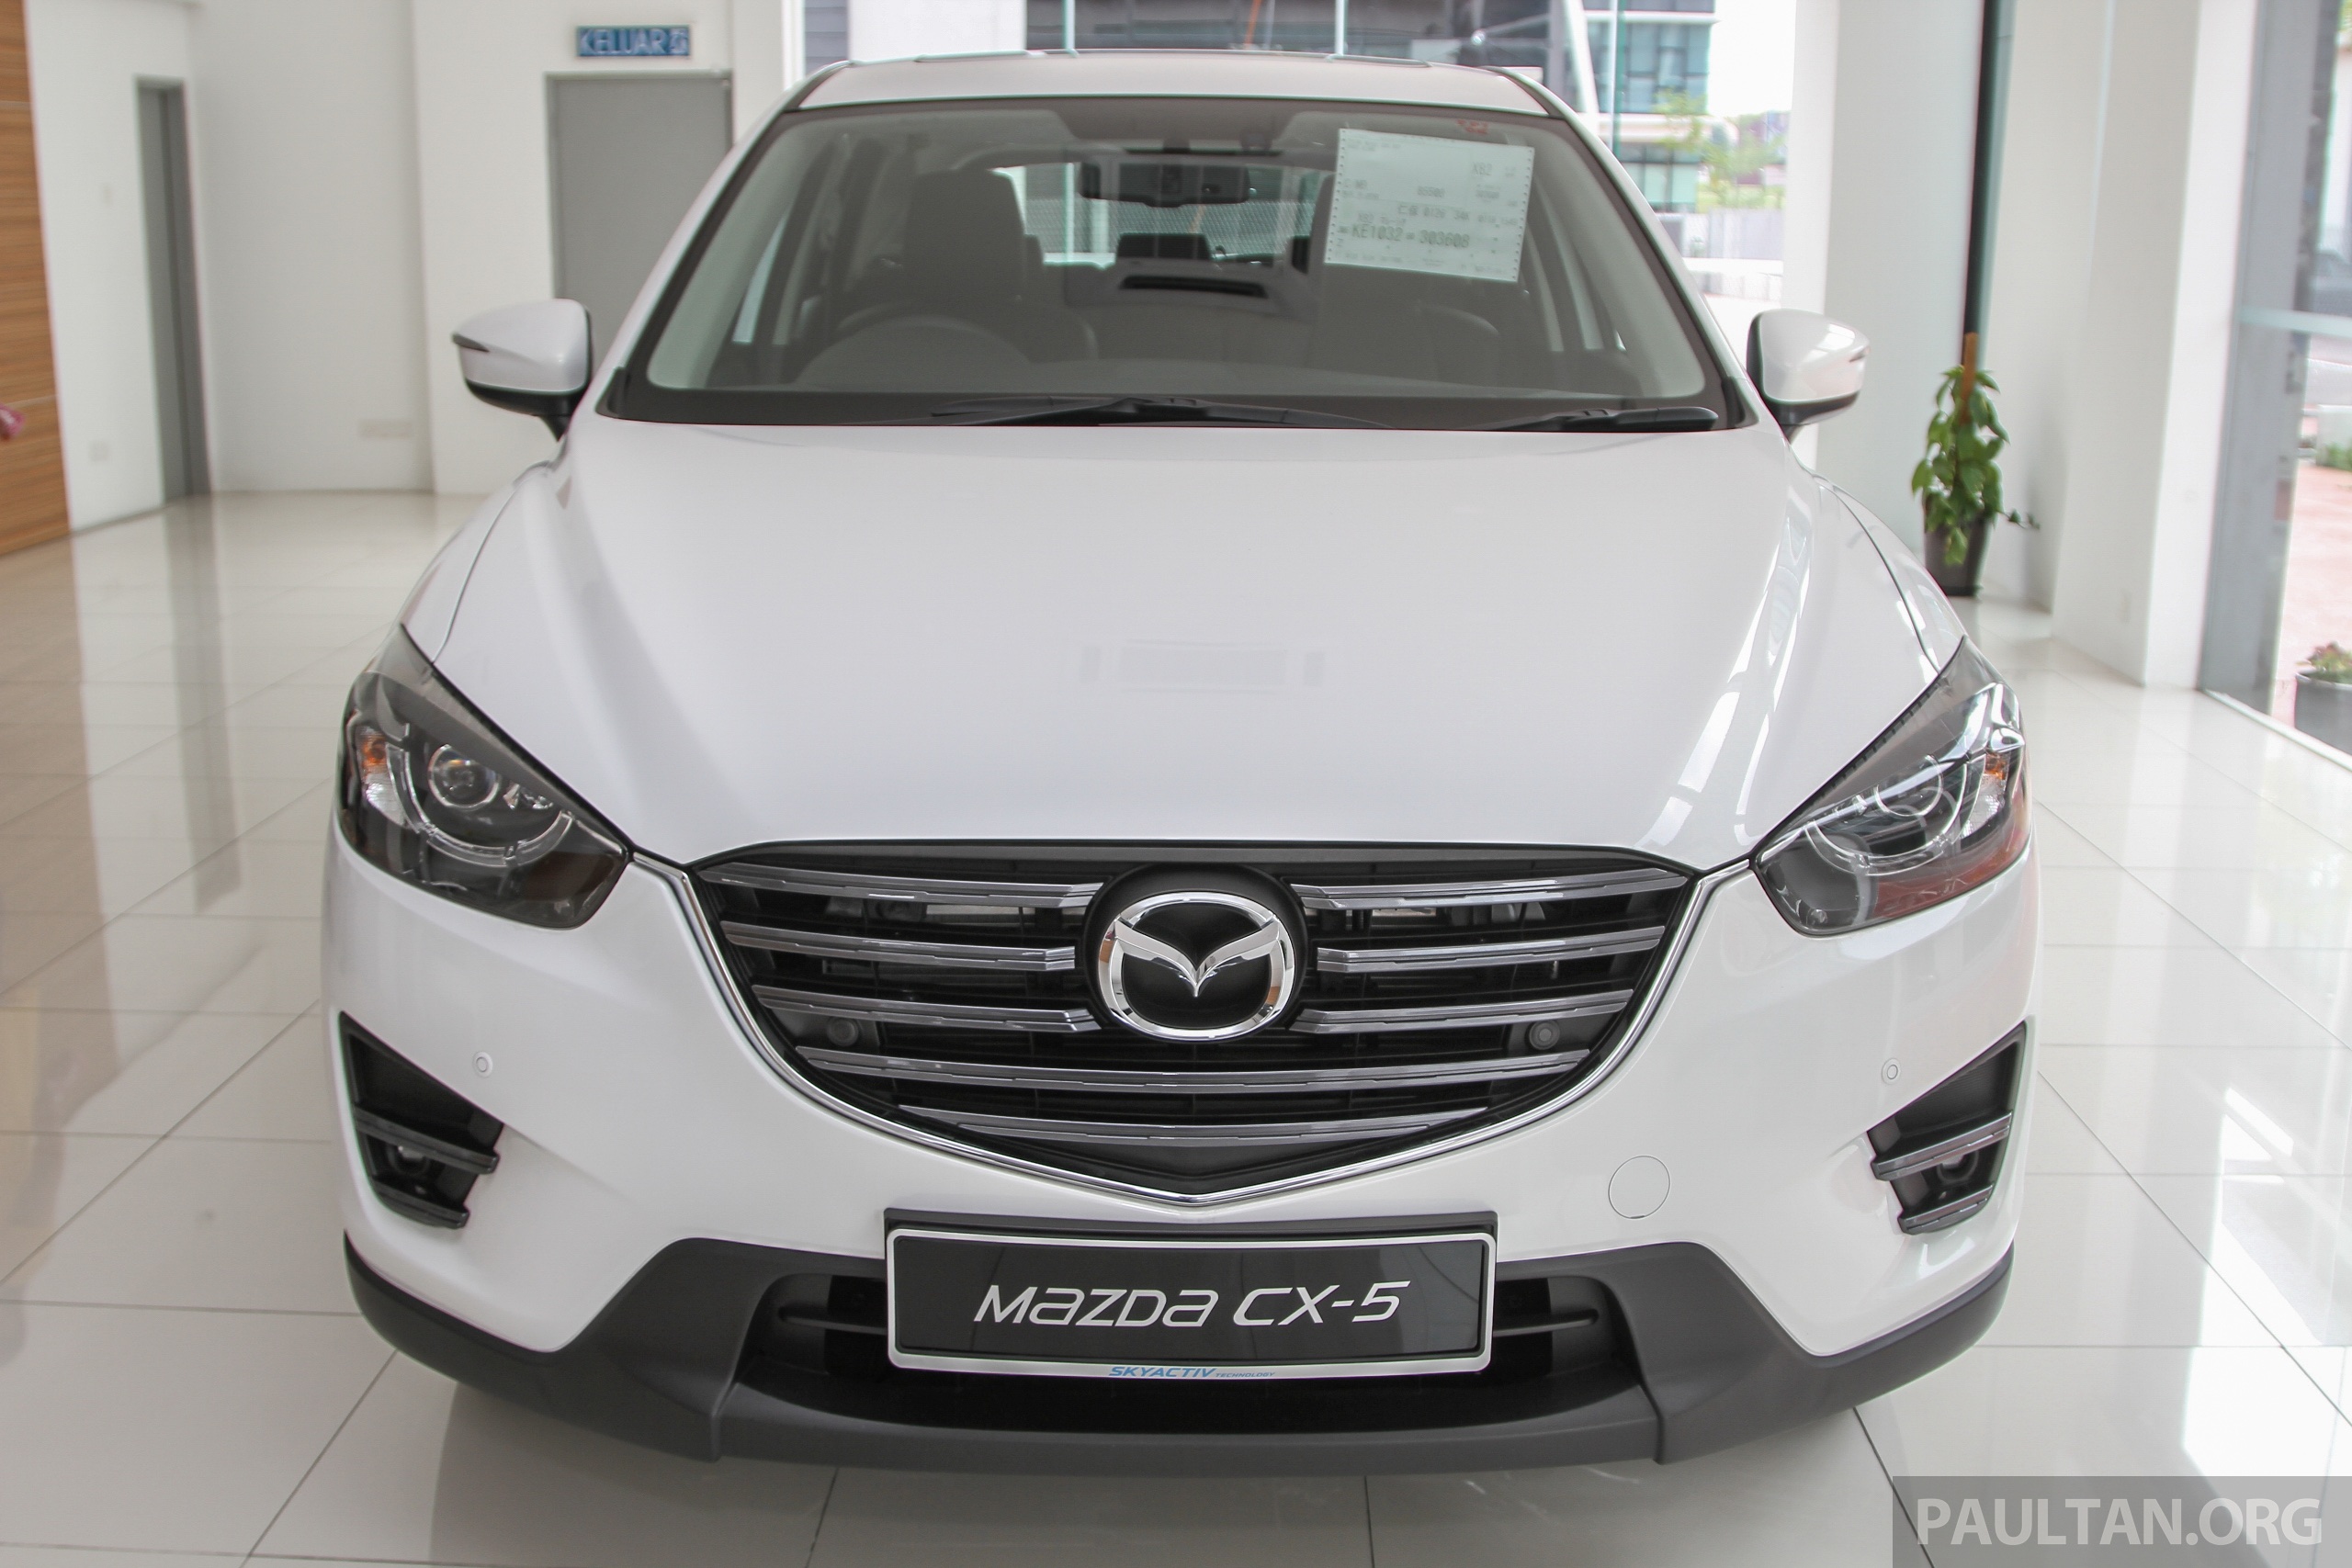 Mazda_CX5_facelift_Malaysia_ 001 Paul Tan's Automotive News